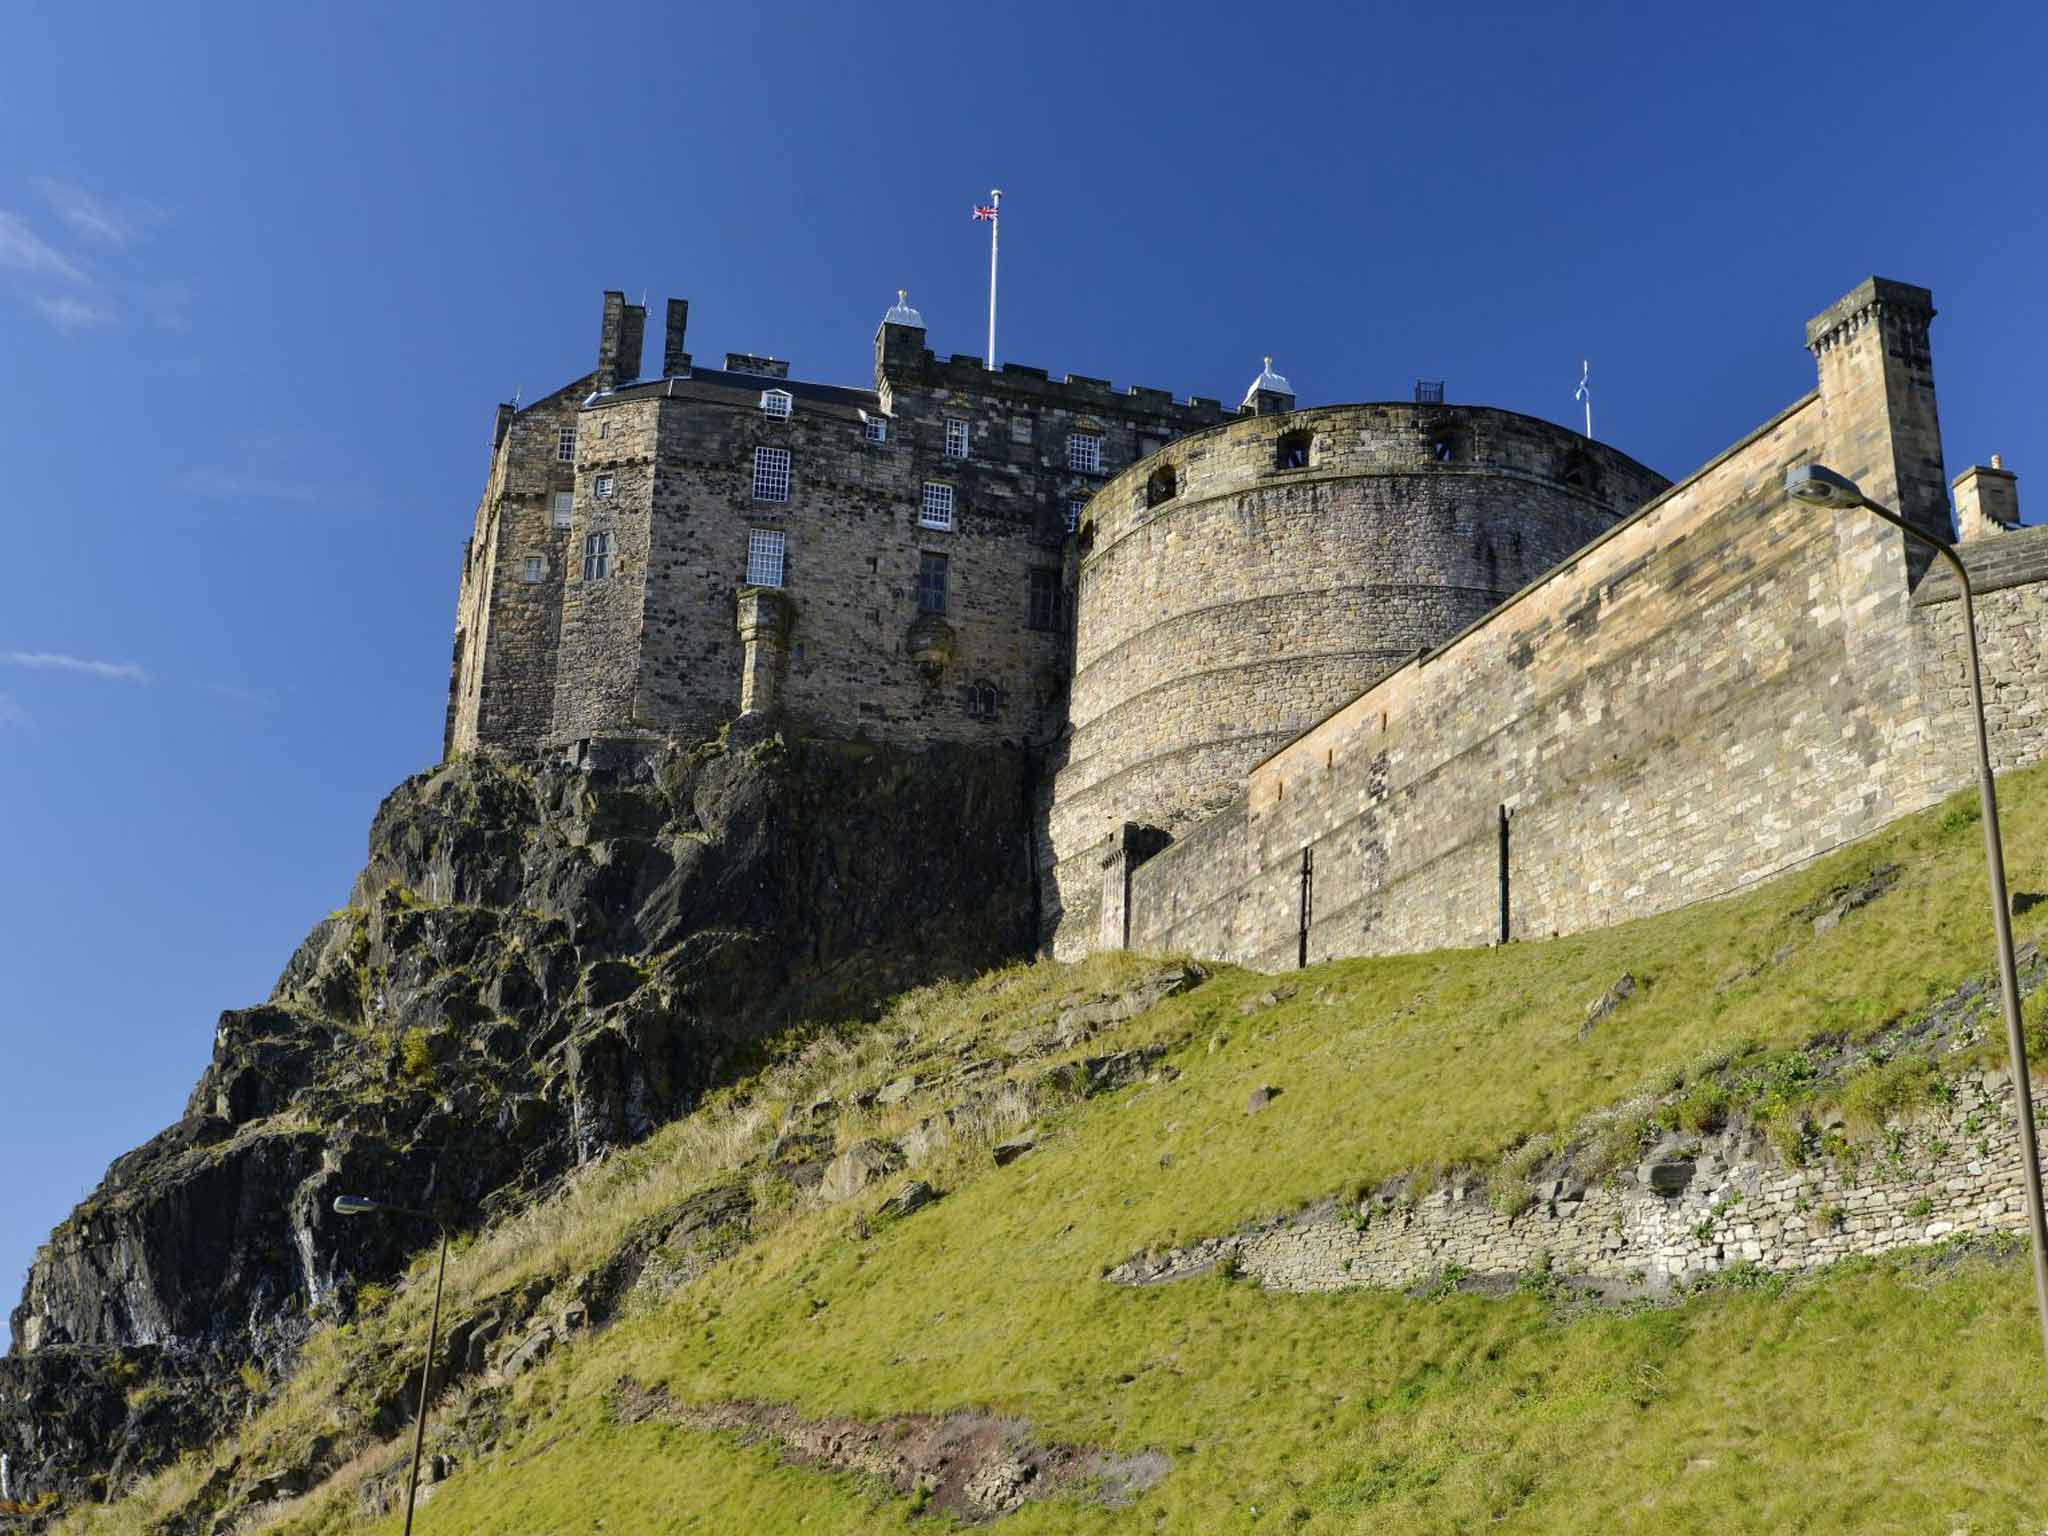 Grand designs: Edinburgh Castle